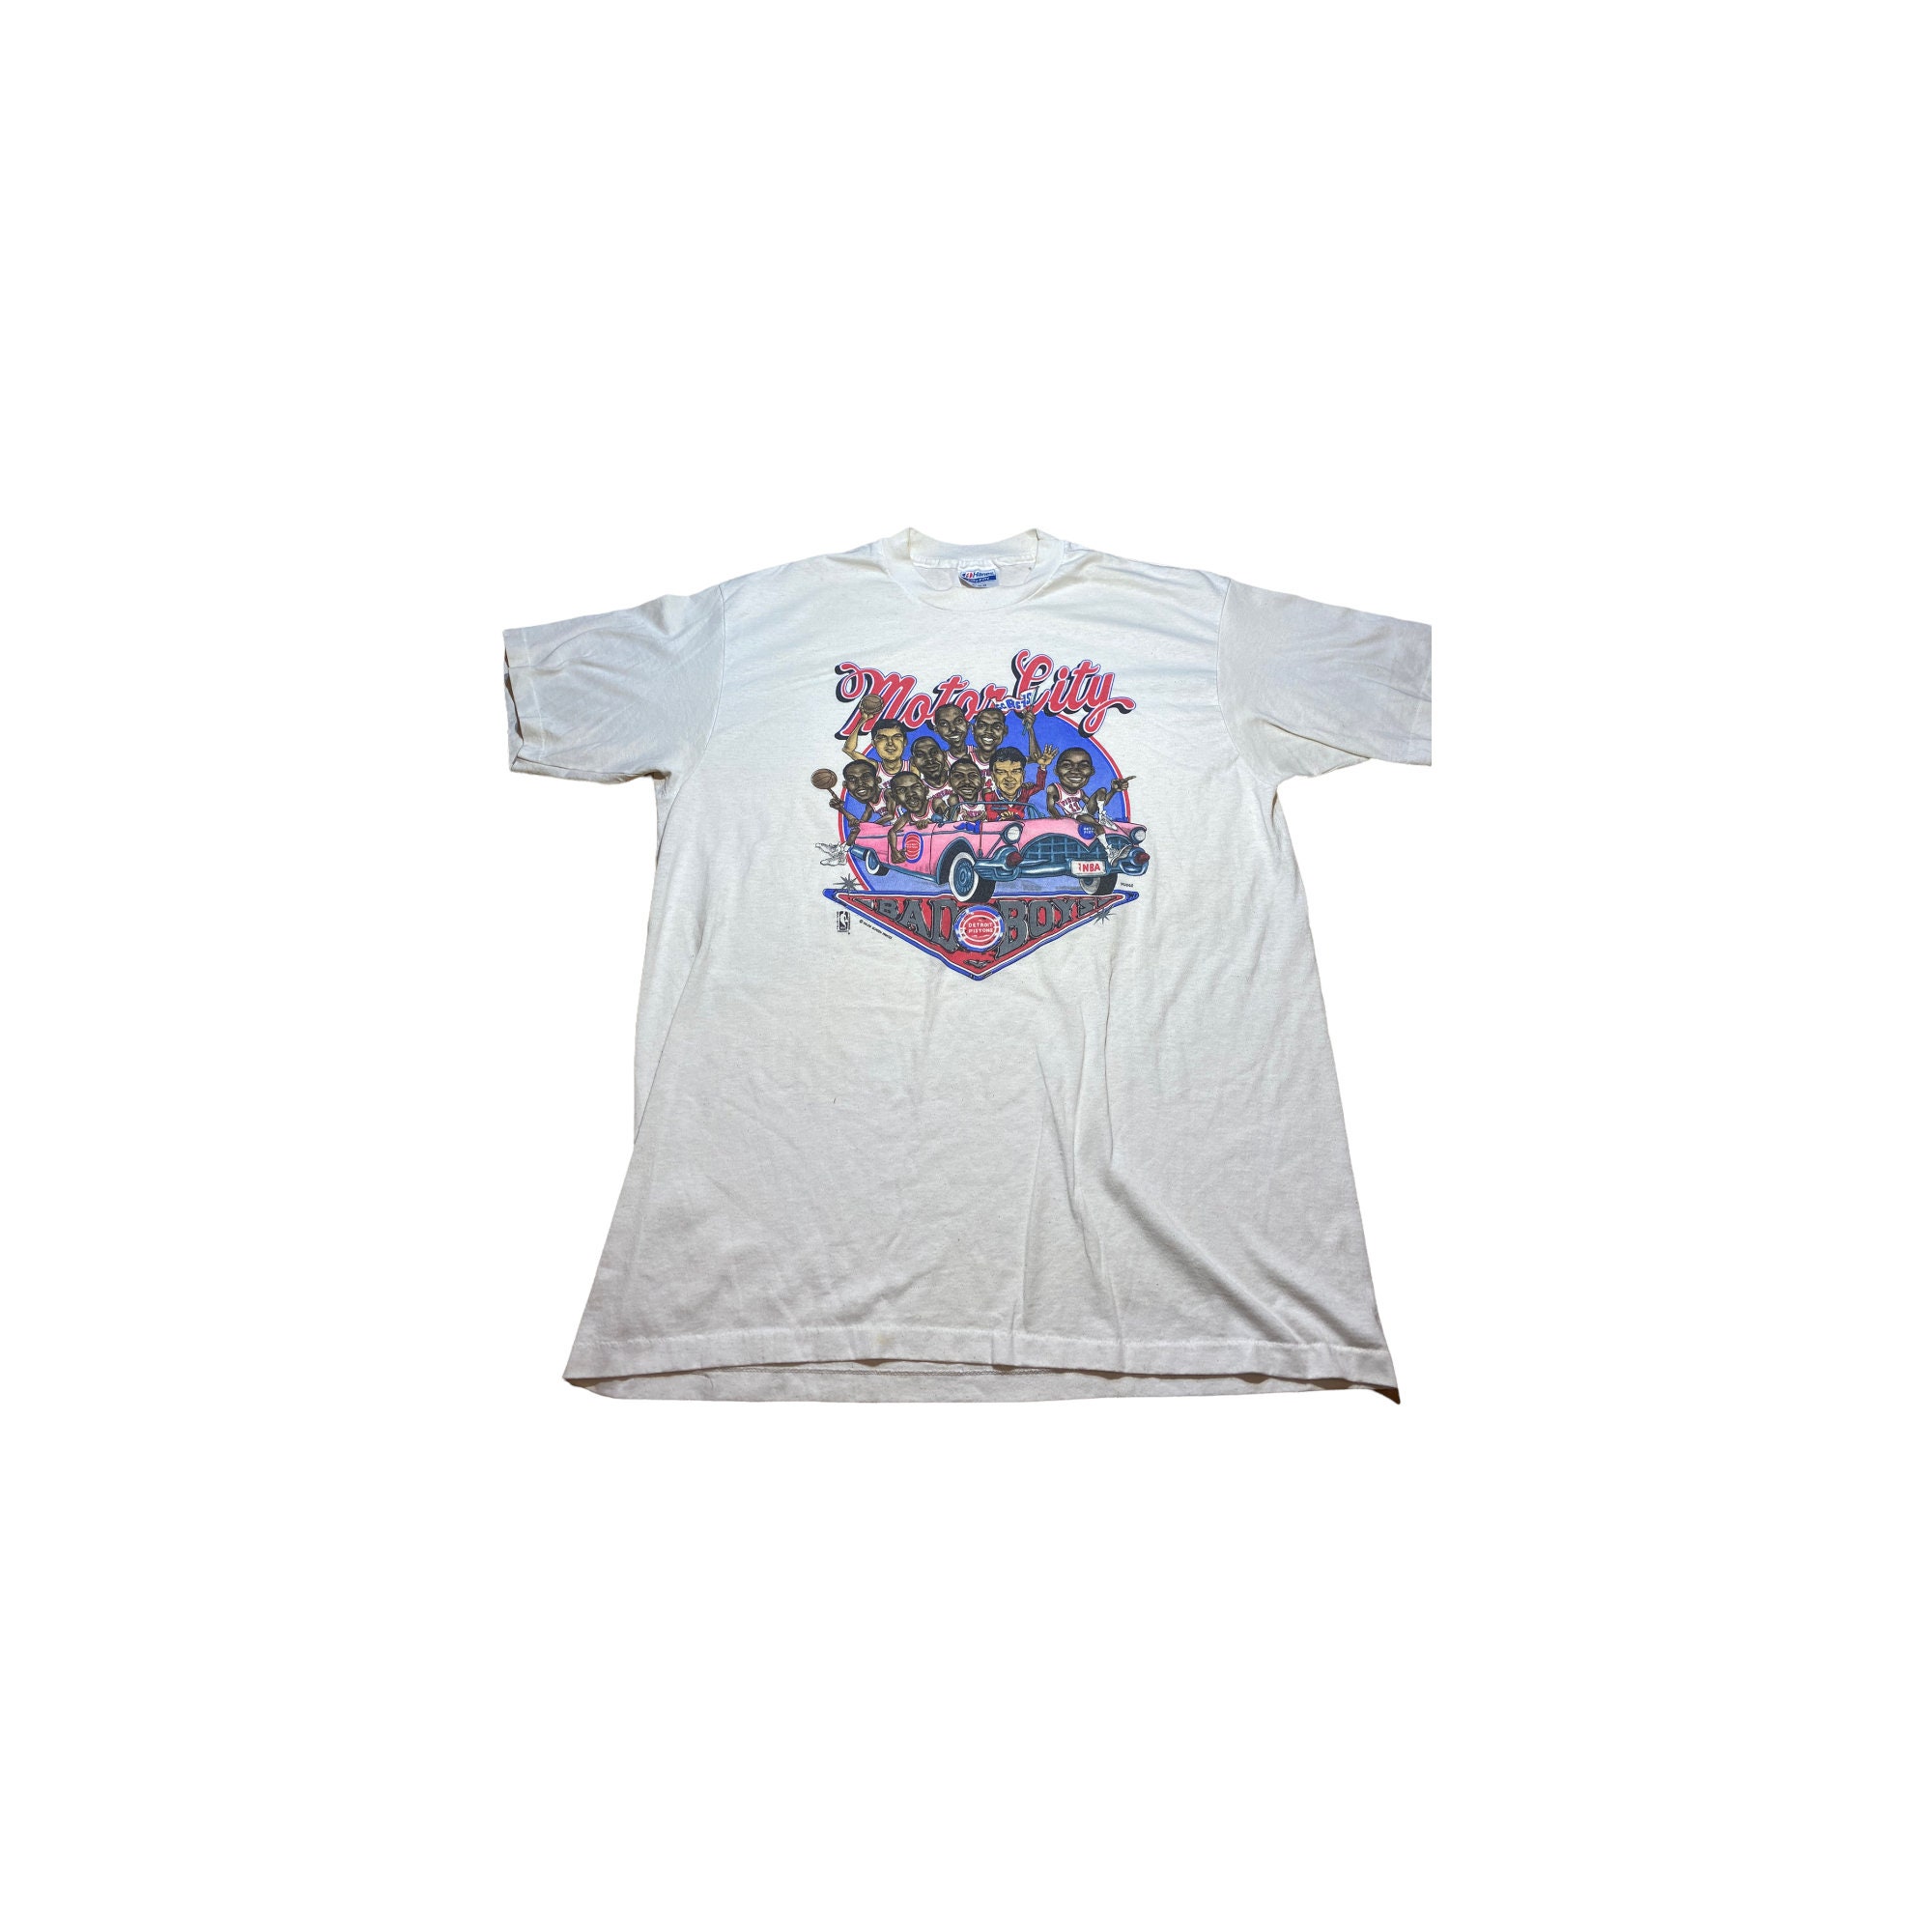 Vintage Detroit Pistons World Champions Salem T-shirt XL 1989 Nba  Basketball